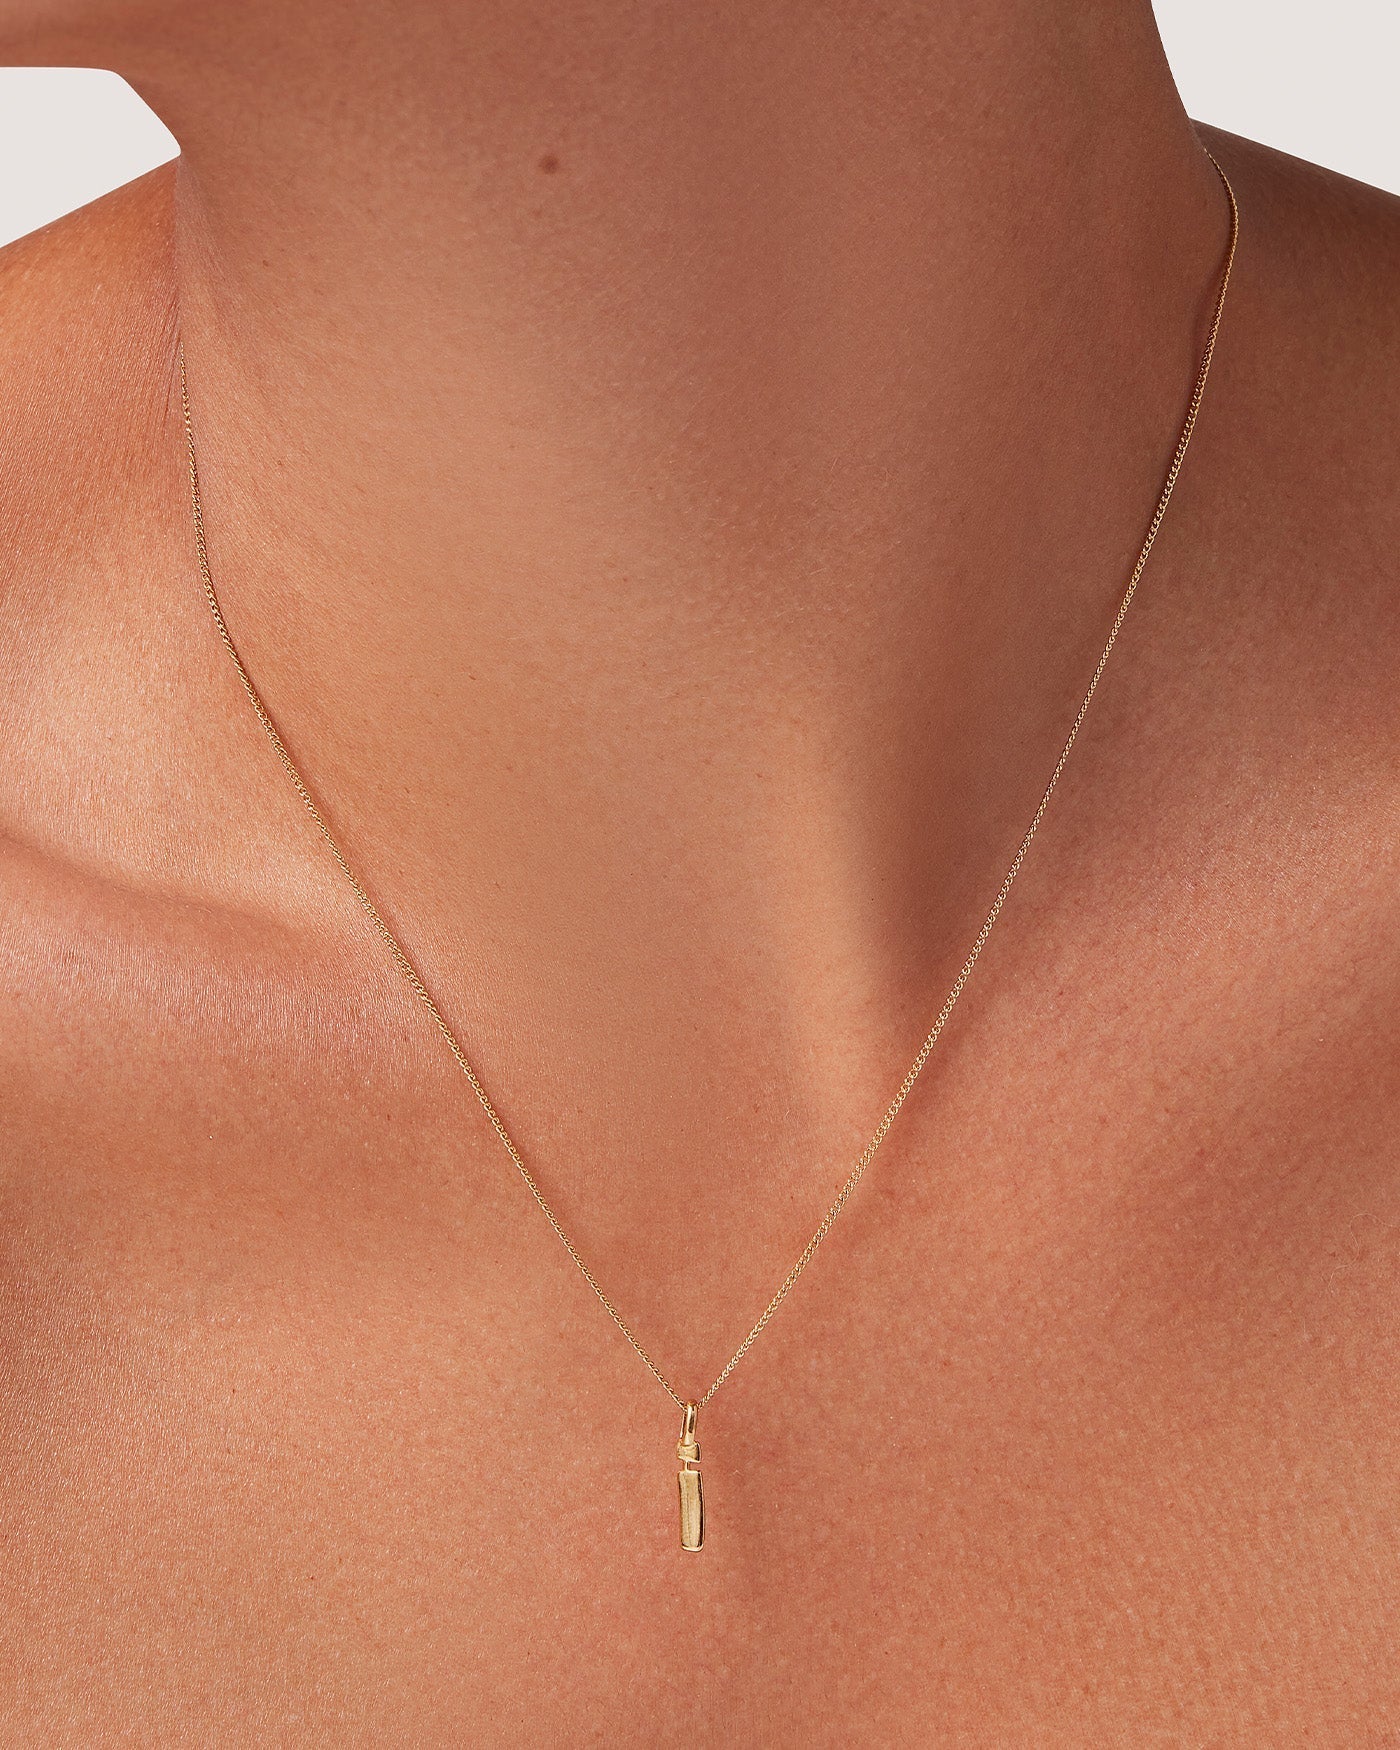 Monogram Necklace in Gold - I